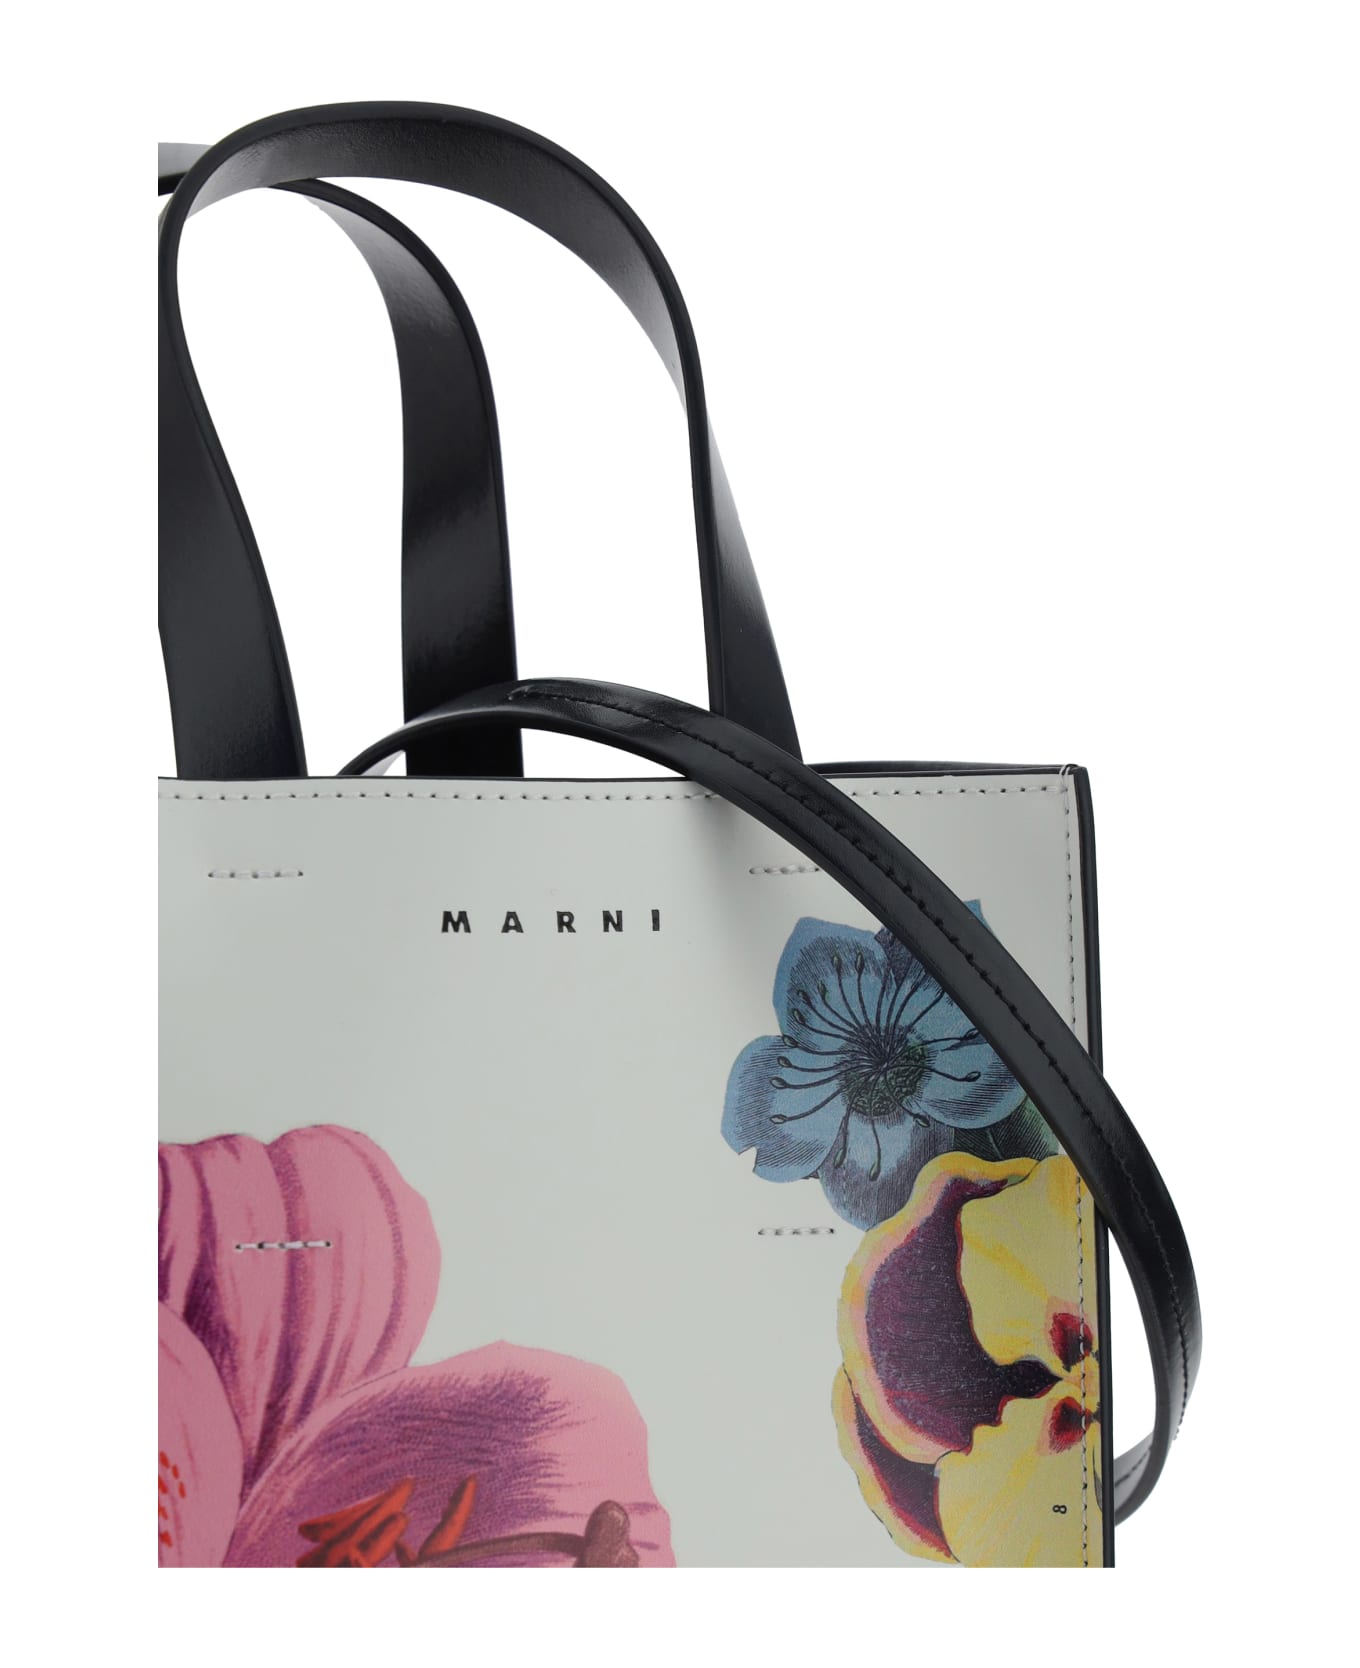 Marni Tote Handbag - Lily White/pink/black